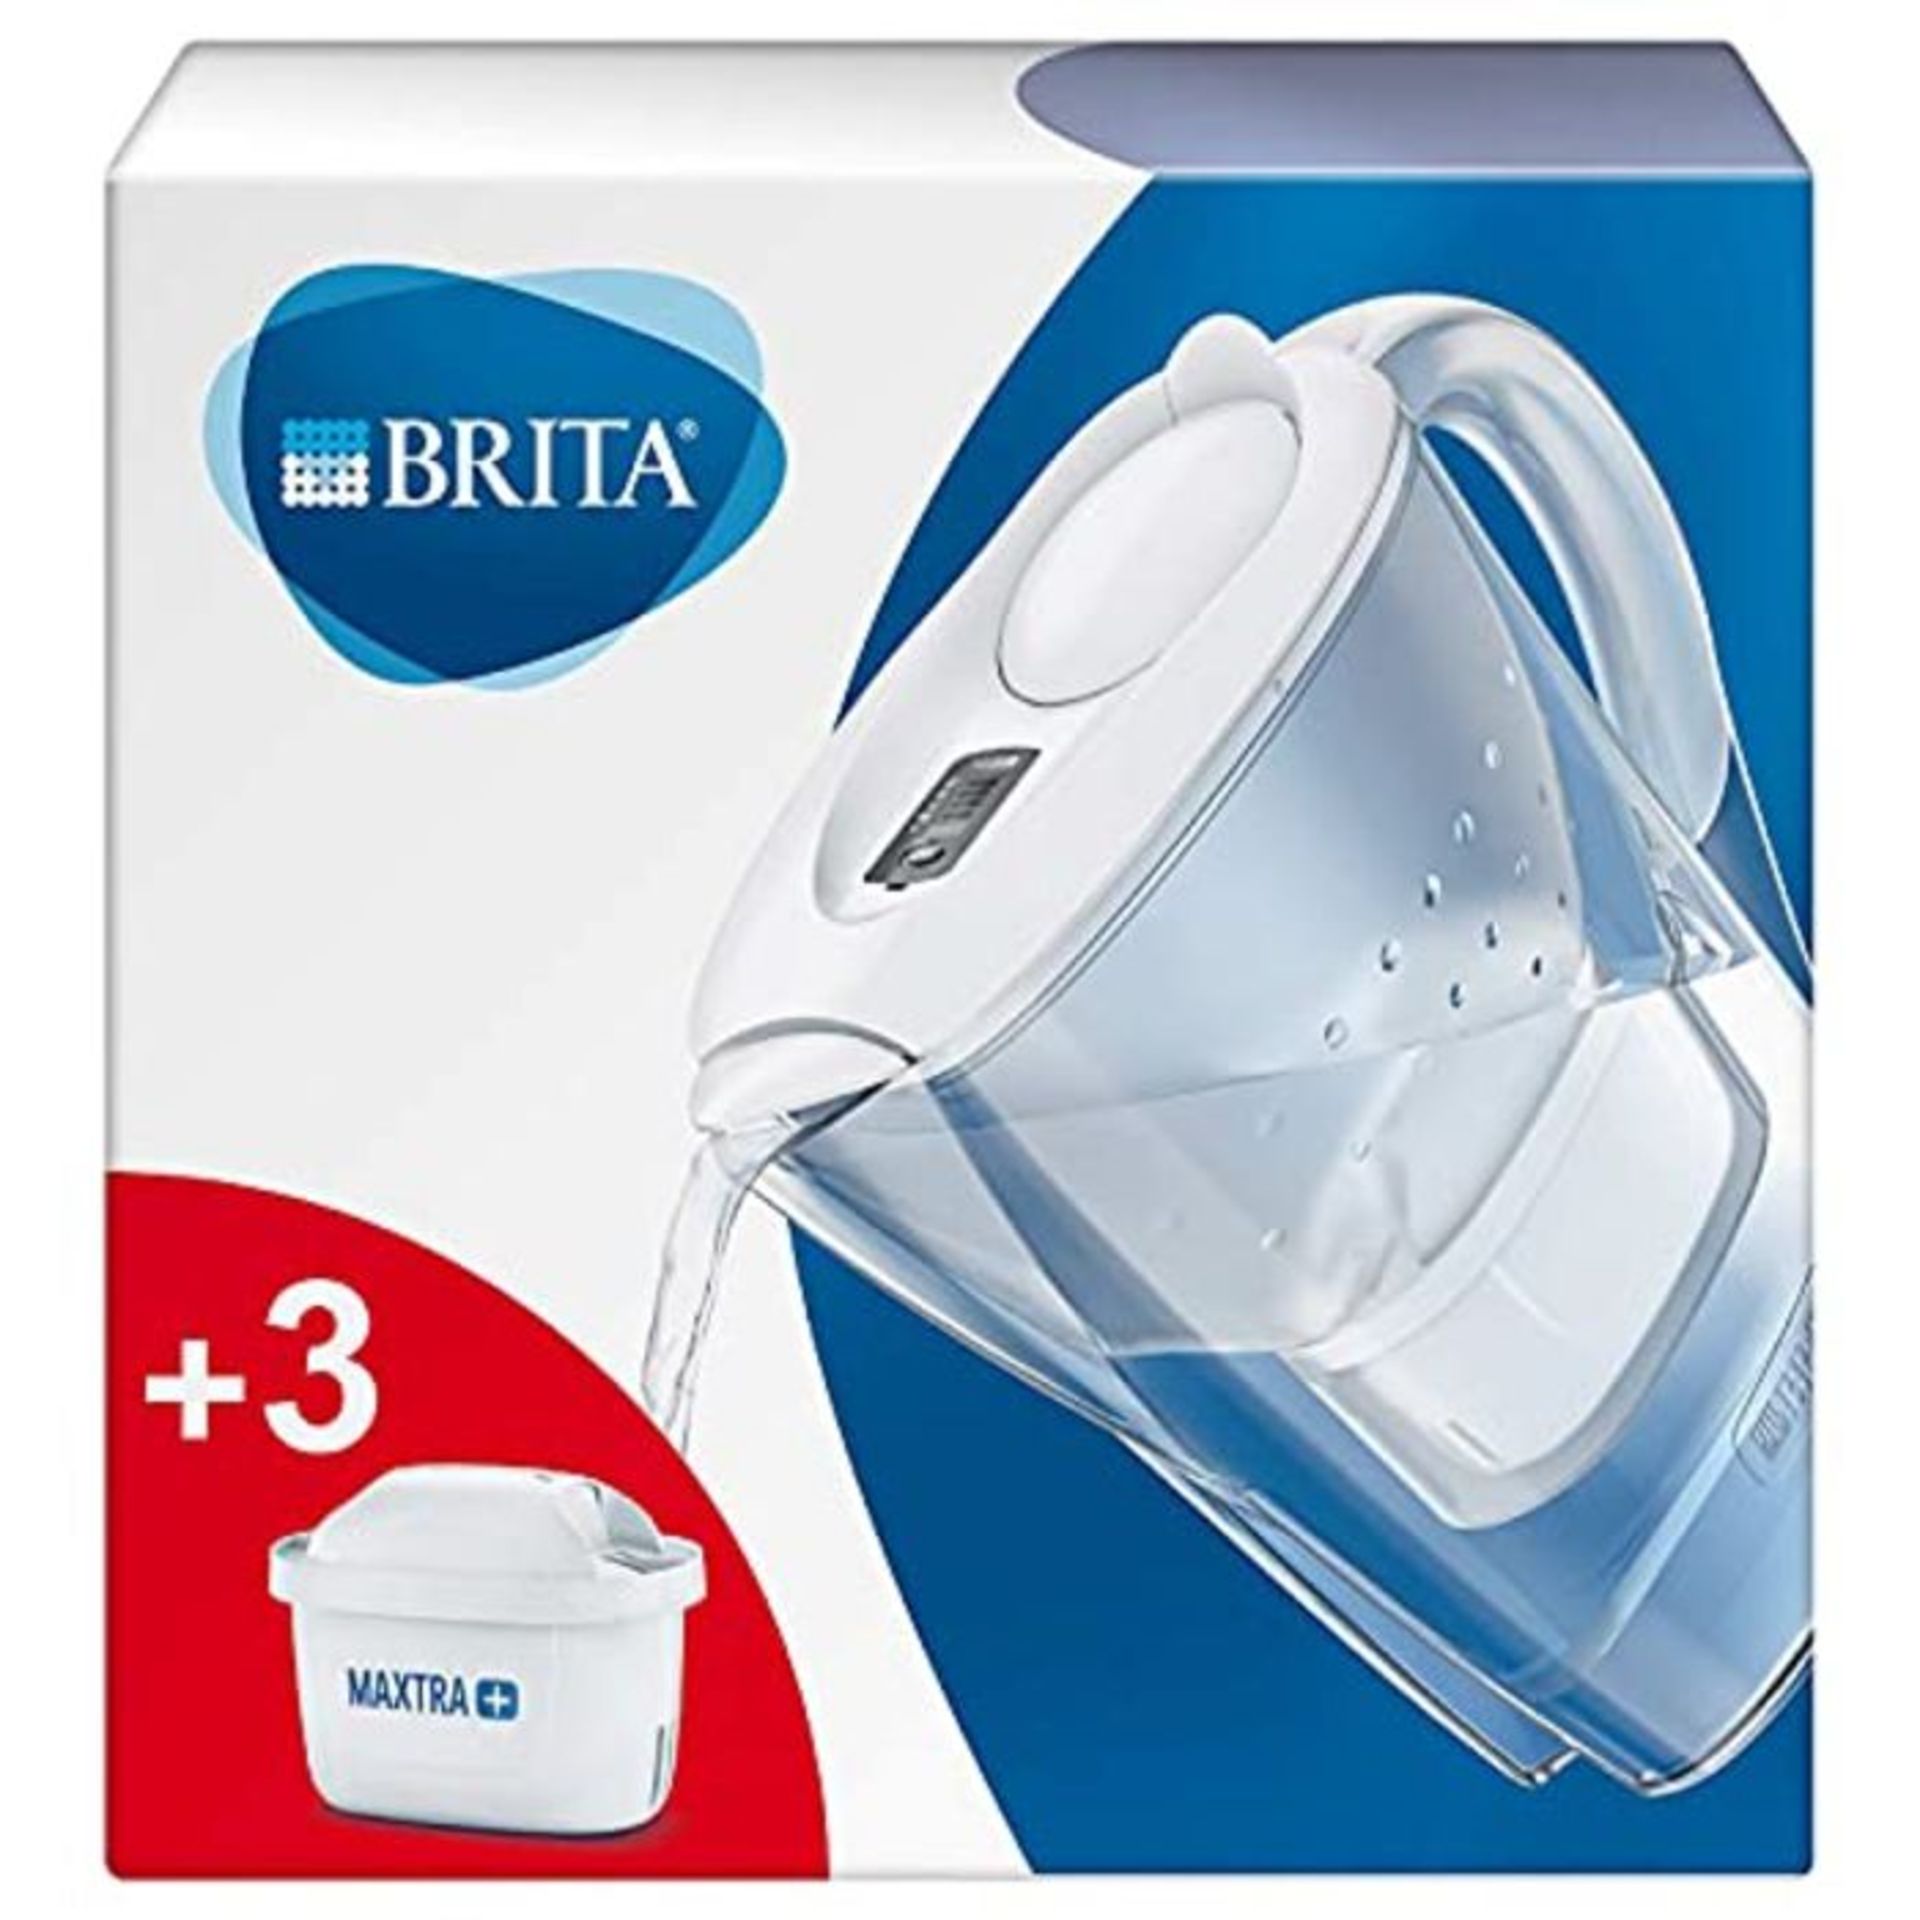 BRITA Marella fridge water filter jug for reduction of chlorine, limescale and impurit